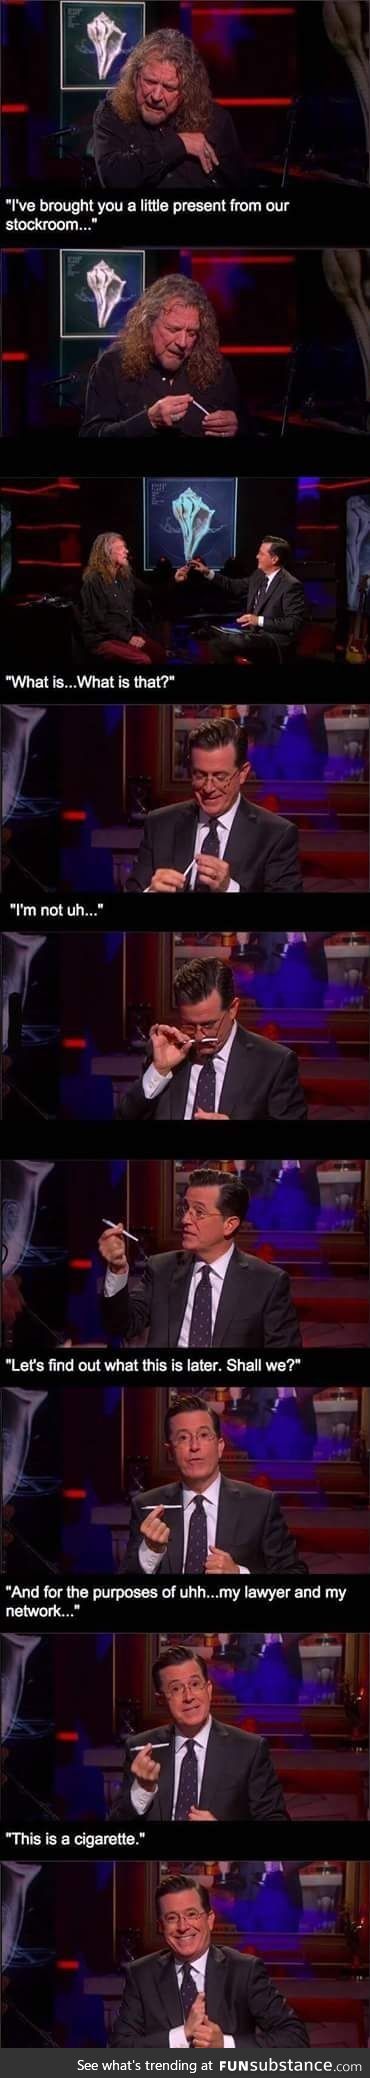 Colbert is the best